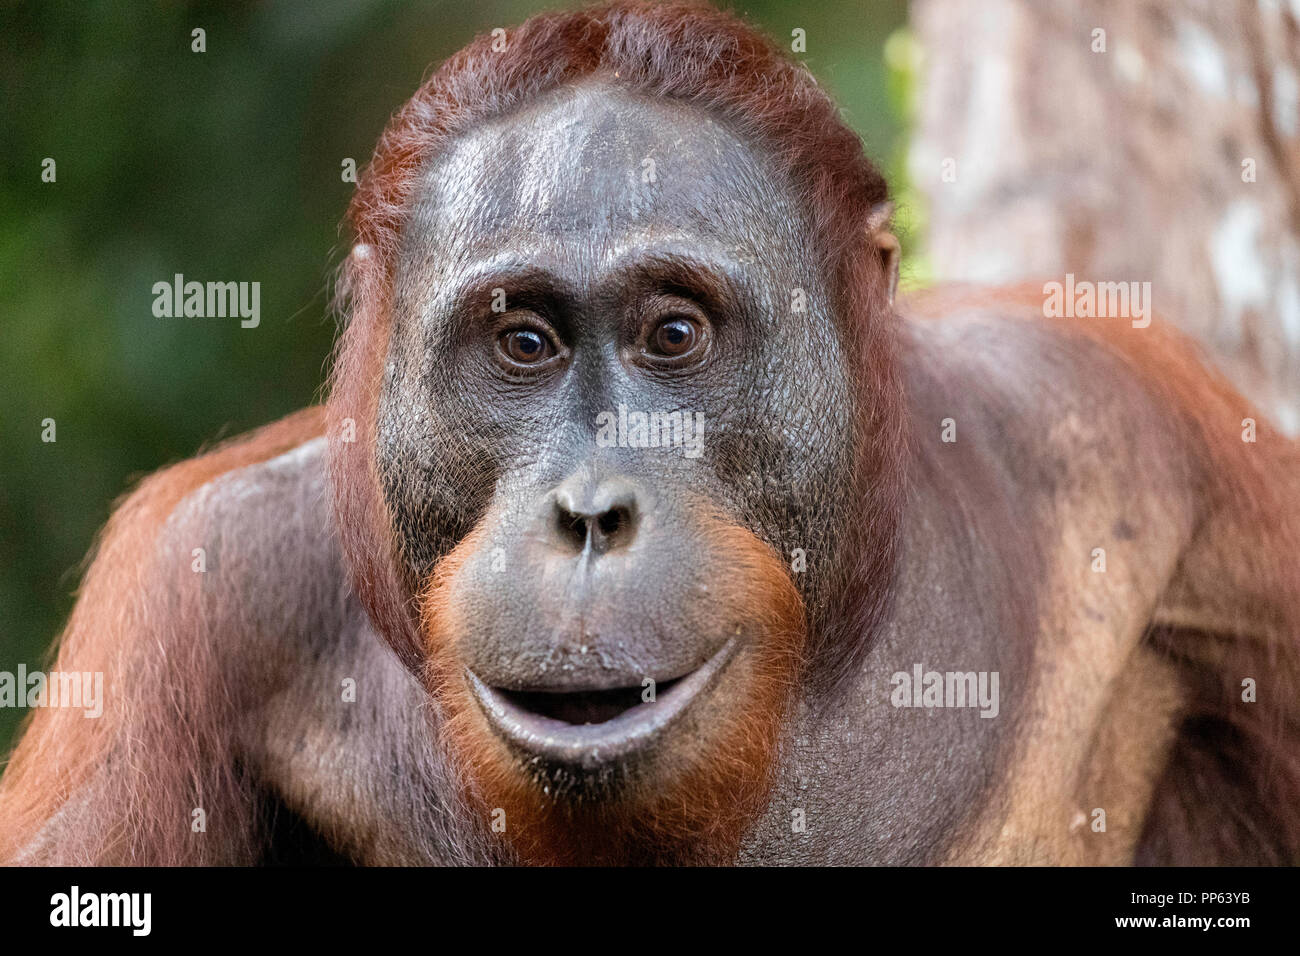 Male Bornean orangutan (Pongo pygmaeus), looking intensely at camera, Borneo, Indonesia. Stock Photo